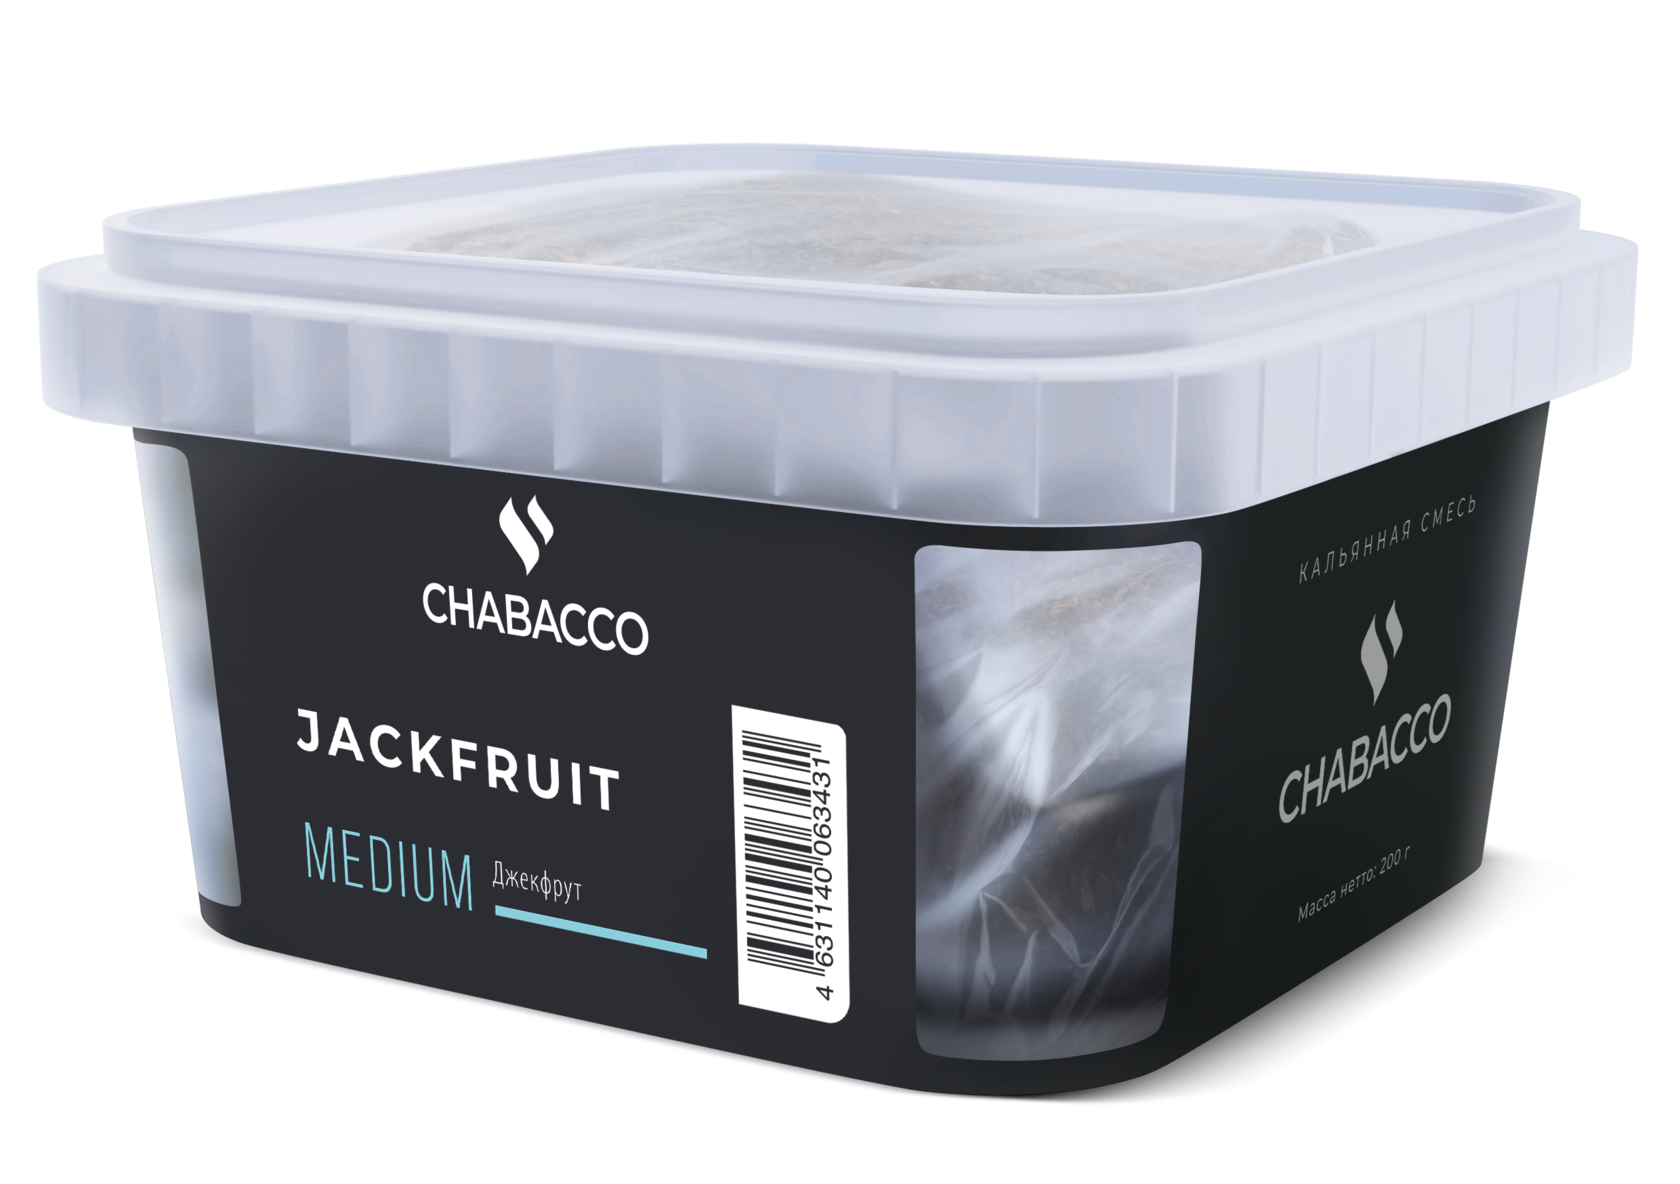 Chabacco - Medium - JACKFRUIT - 200 g